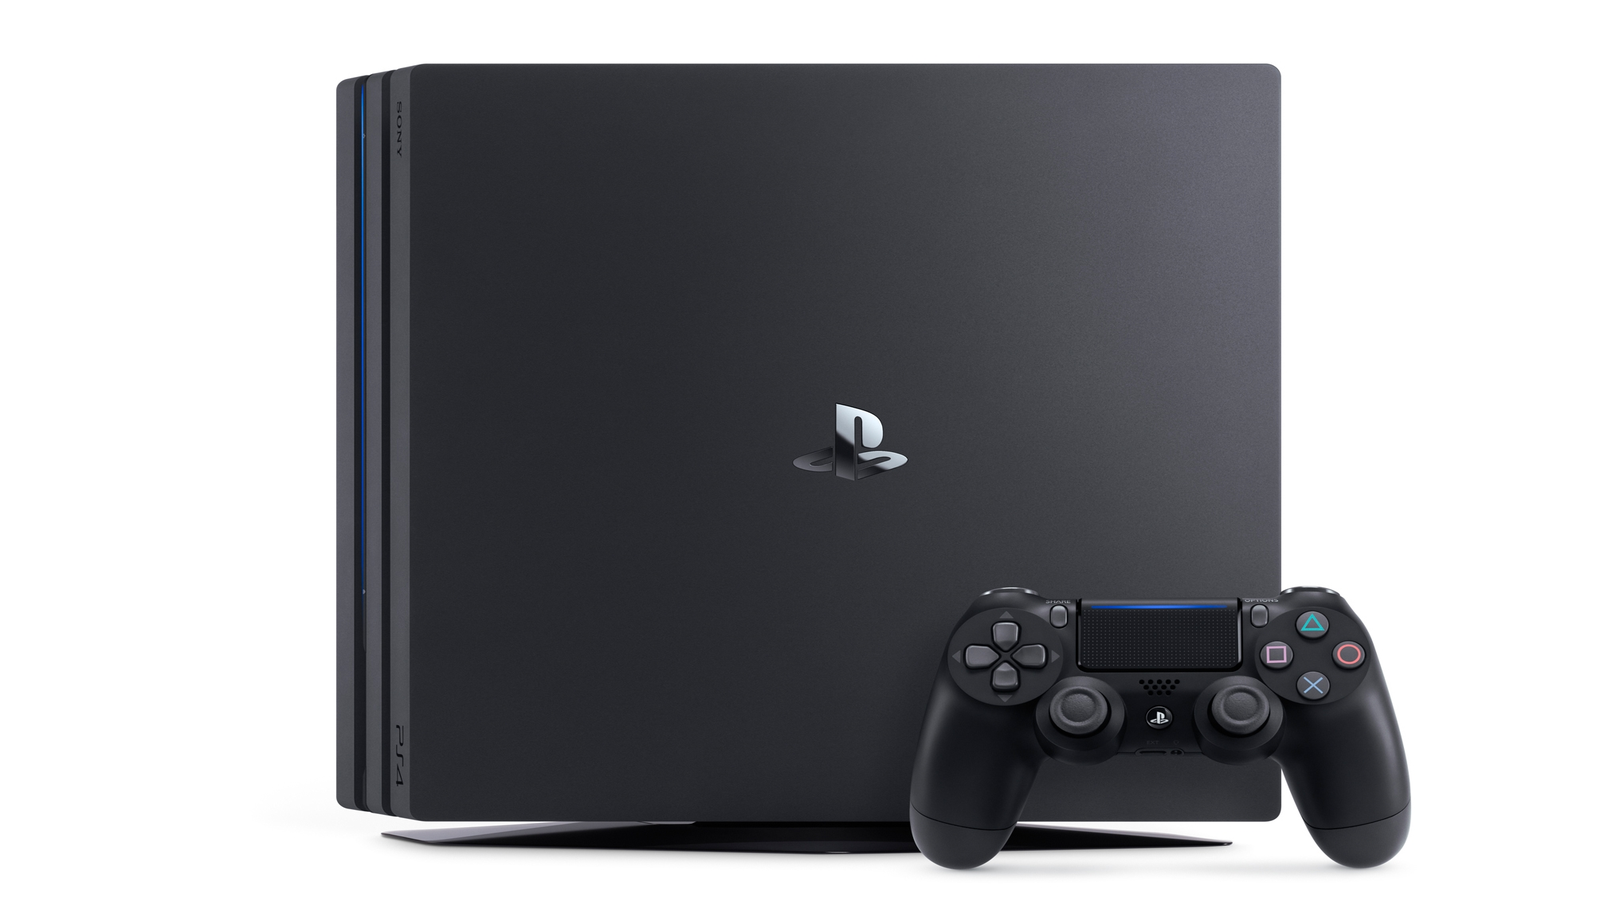 Sony PlayStation 4 passes 100 million sales milestone - PS4 - News